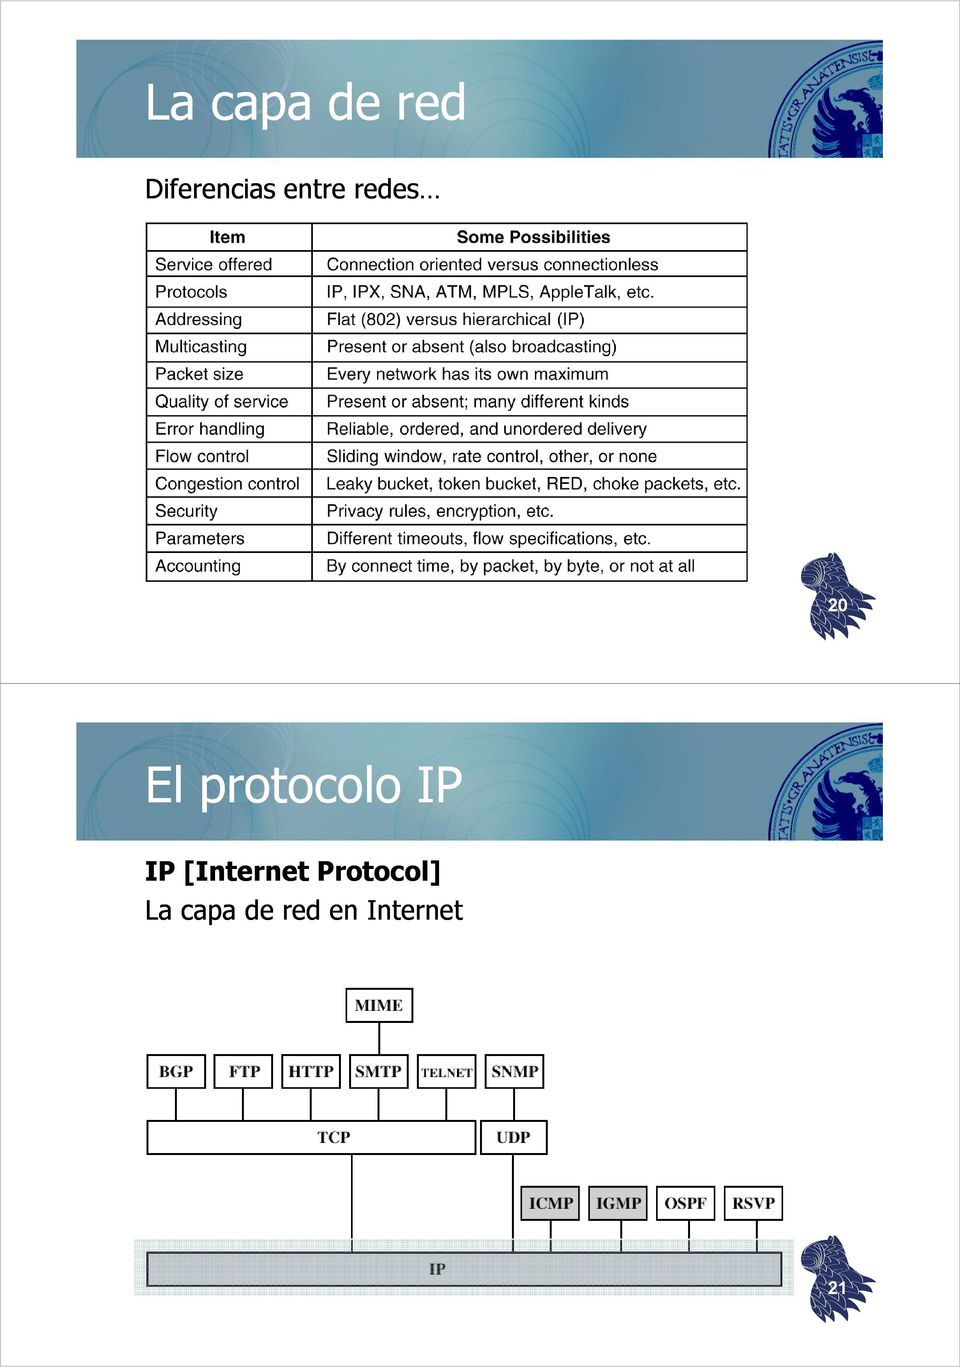 IP IP [Internet Protocol]